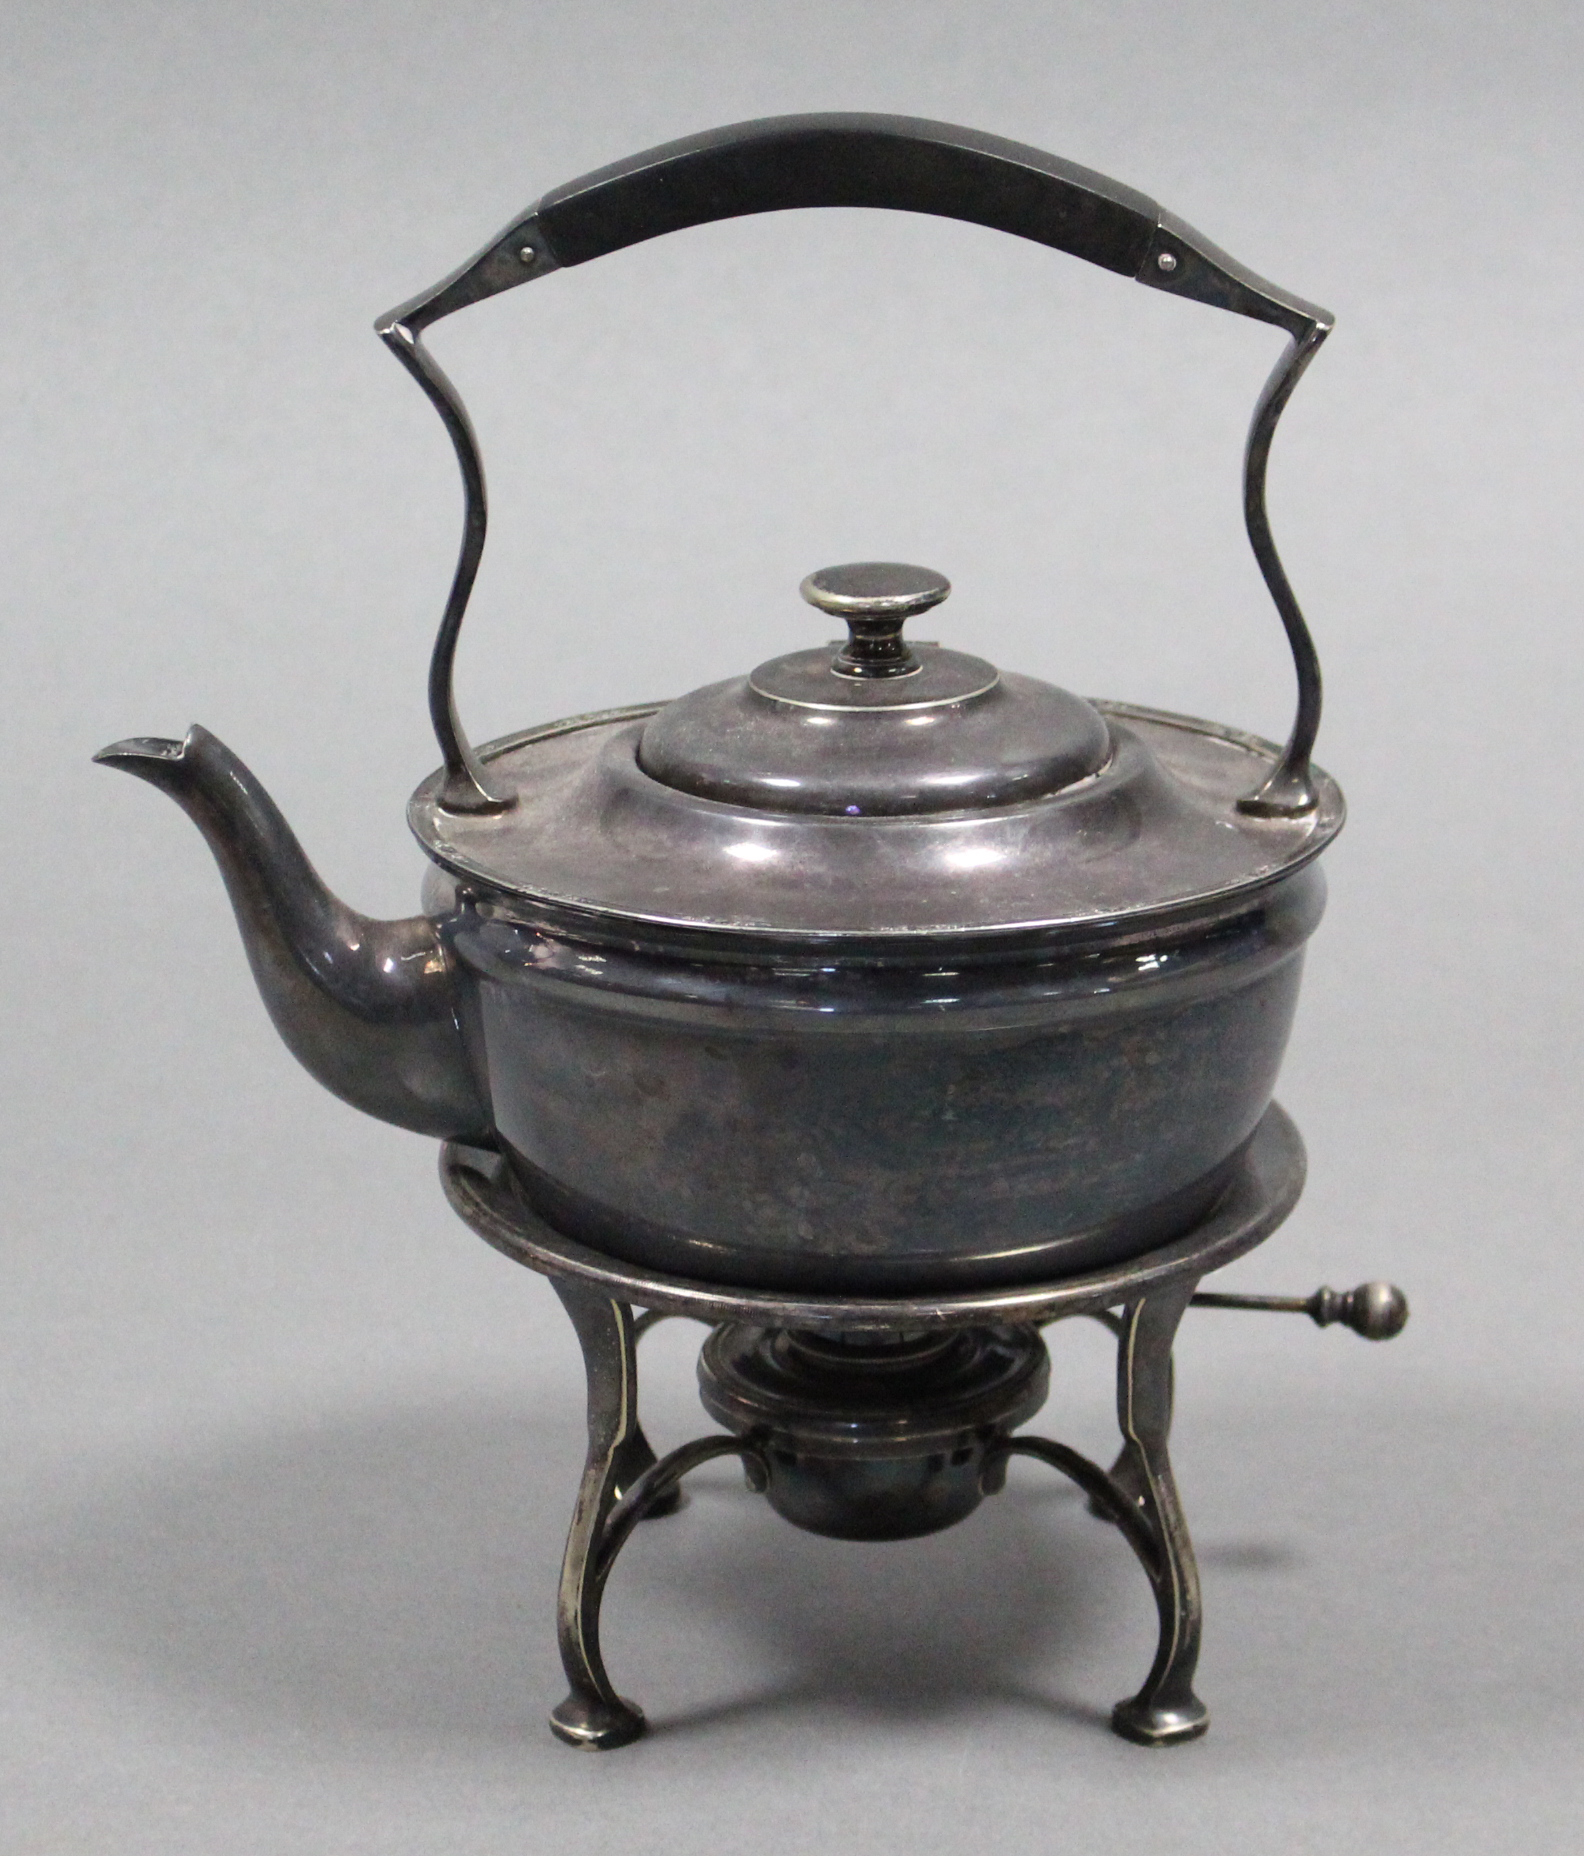 A plain round tea kettle on spirit burner stand; 10½” high.